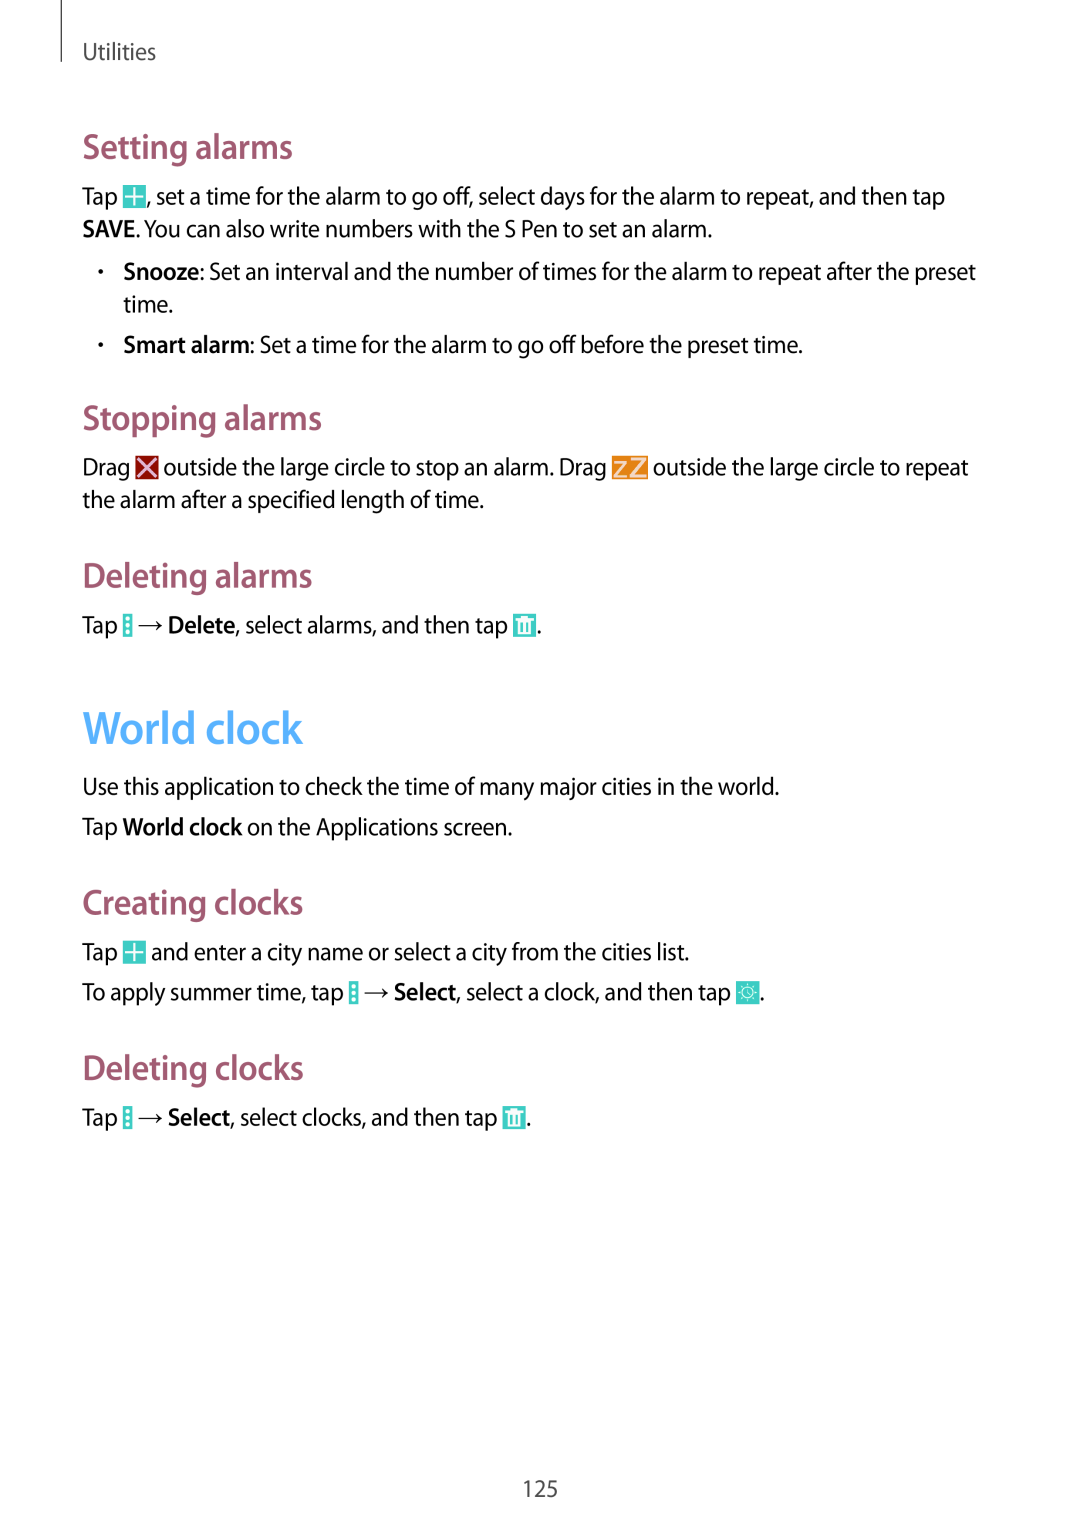 Samsung SM-P9000ZKAXEZ World clock, Setting alarms, Stopping alarms, Deleting alarms, Creating clocks, Deleting clocks 